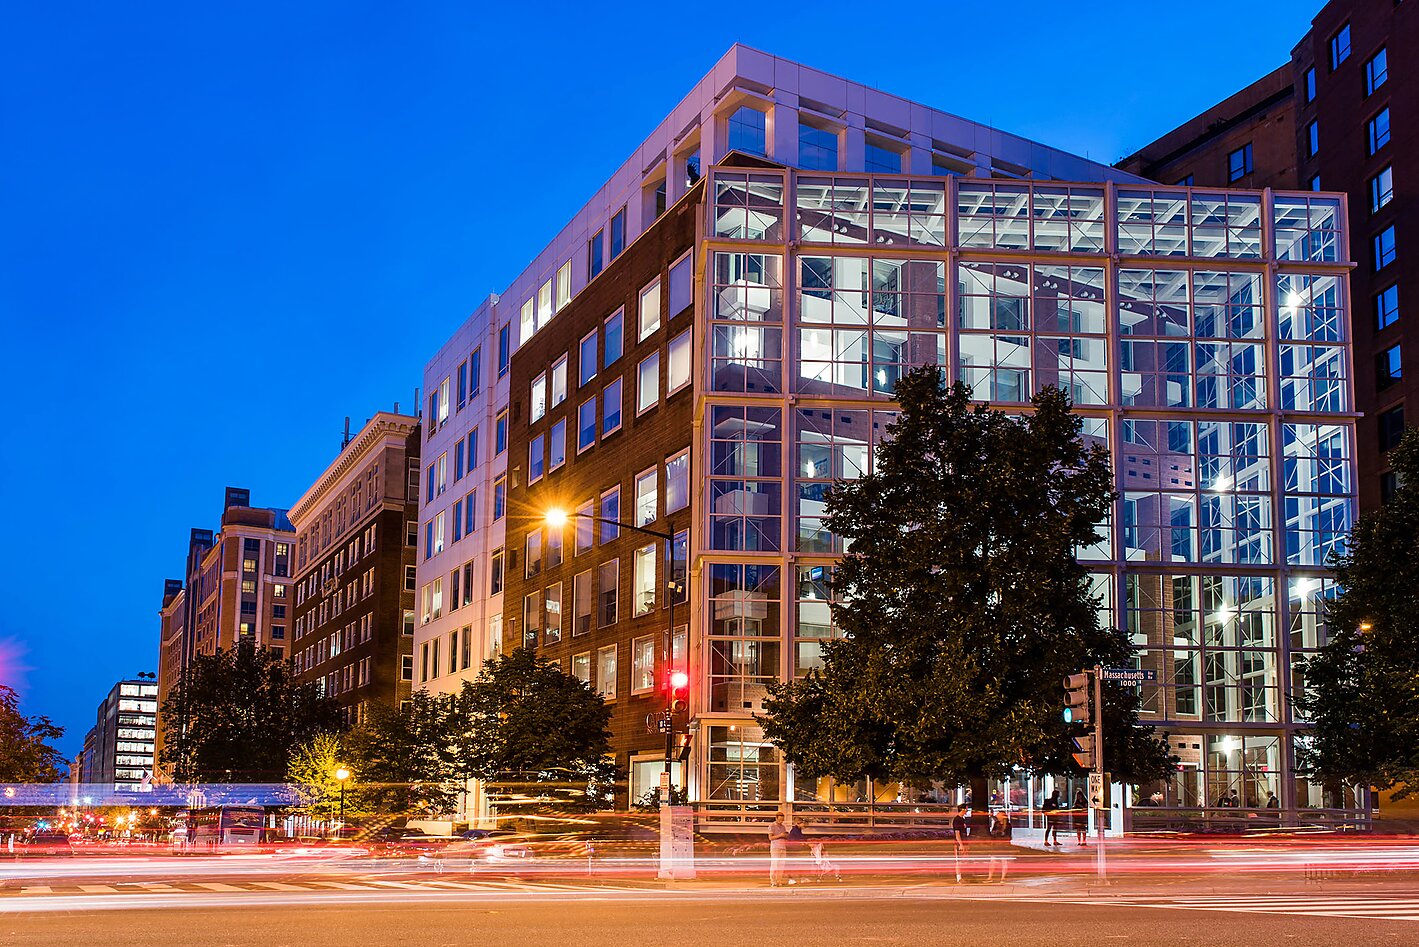 Cato Headquarters - Washington DC Building at Night